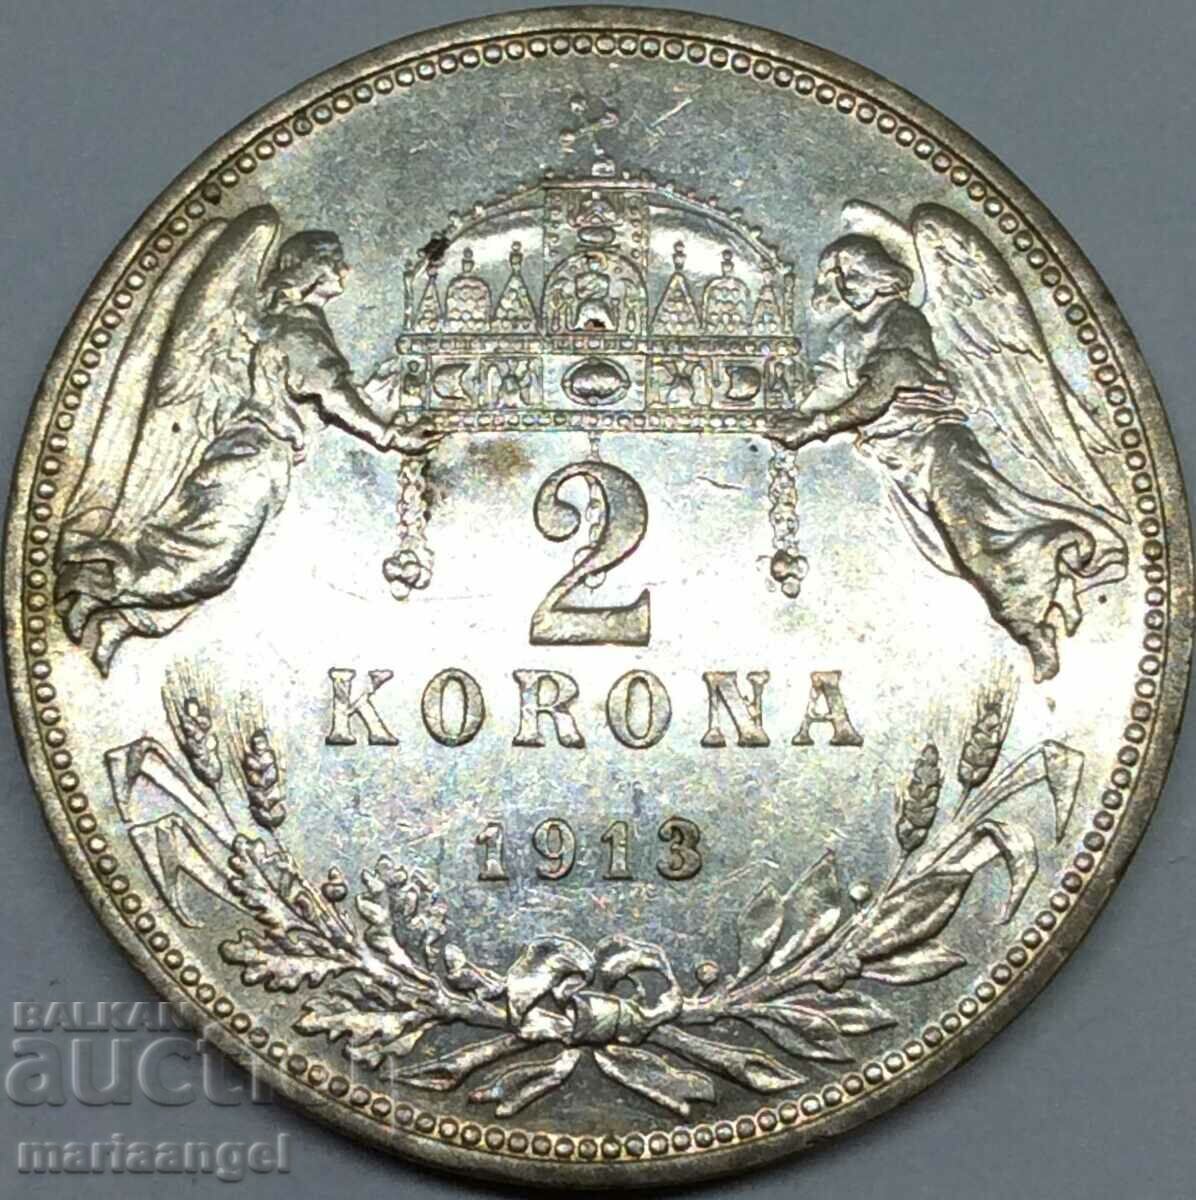 2 coroane 1913 Ungaria Austria Îngeri argint